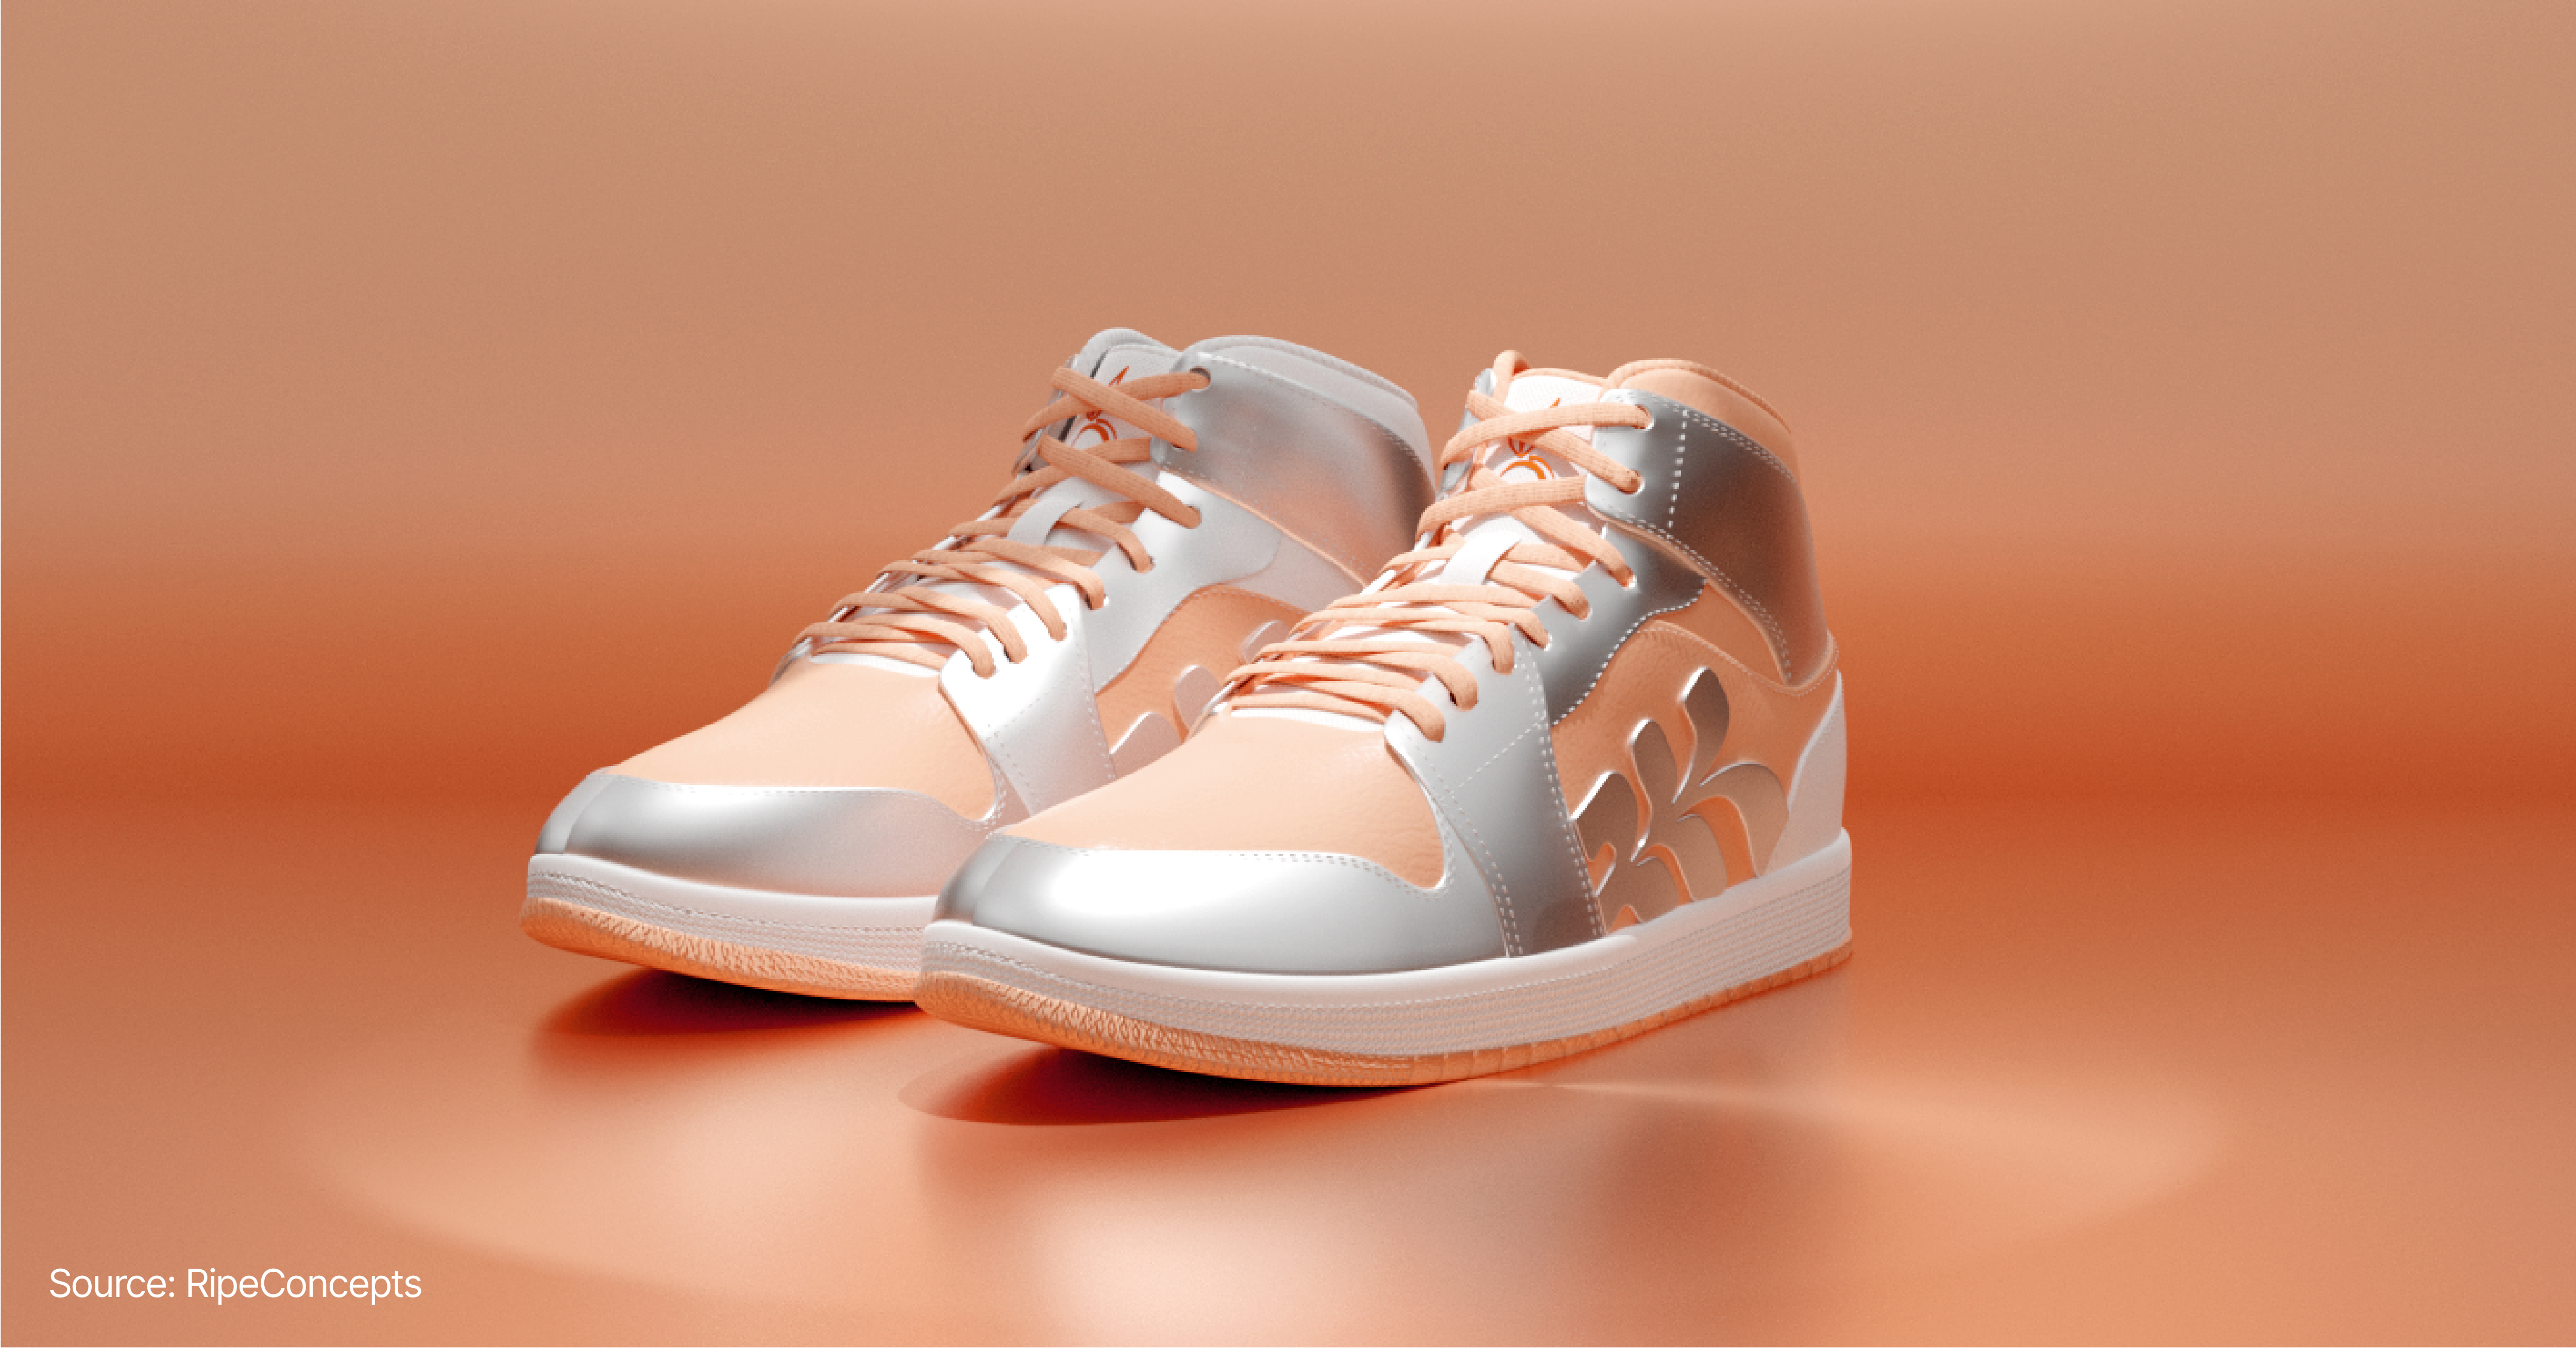 ripeconcepts peach fuzz shoe 3D model 3D illustration color of the year pantone design trends